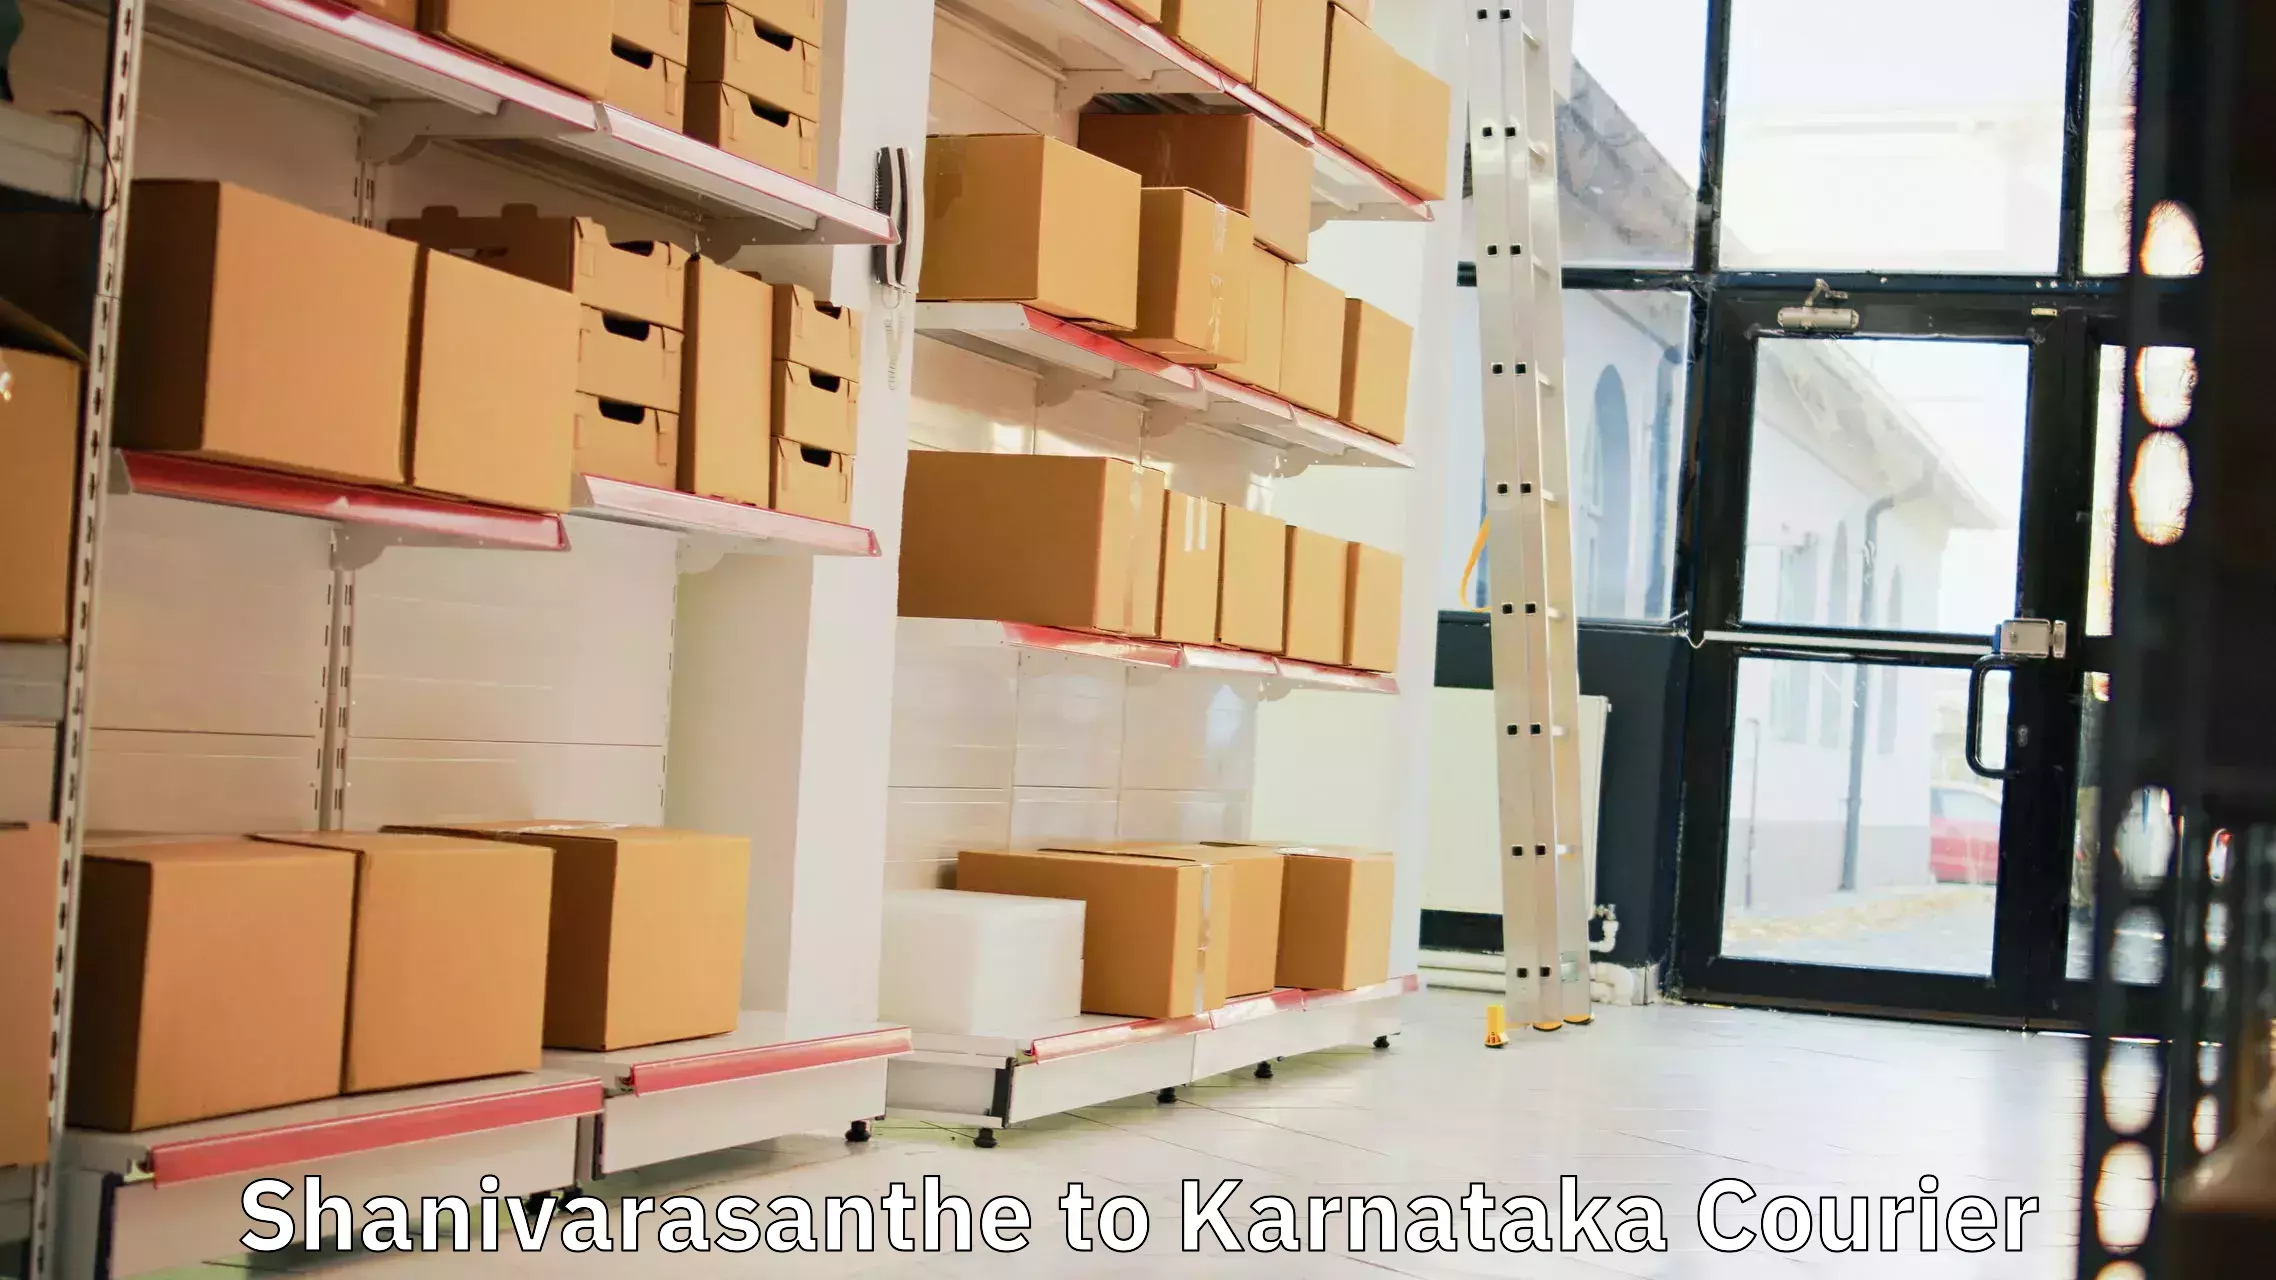 Doorstep delivery service Shanivarasanthe to Karnataka